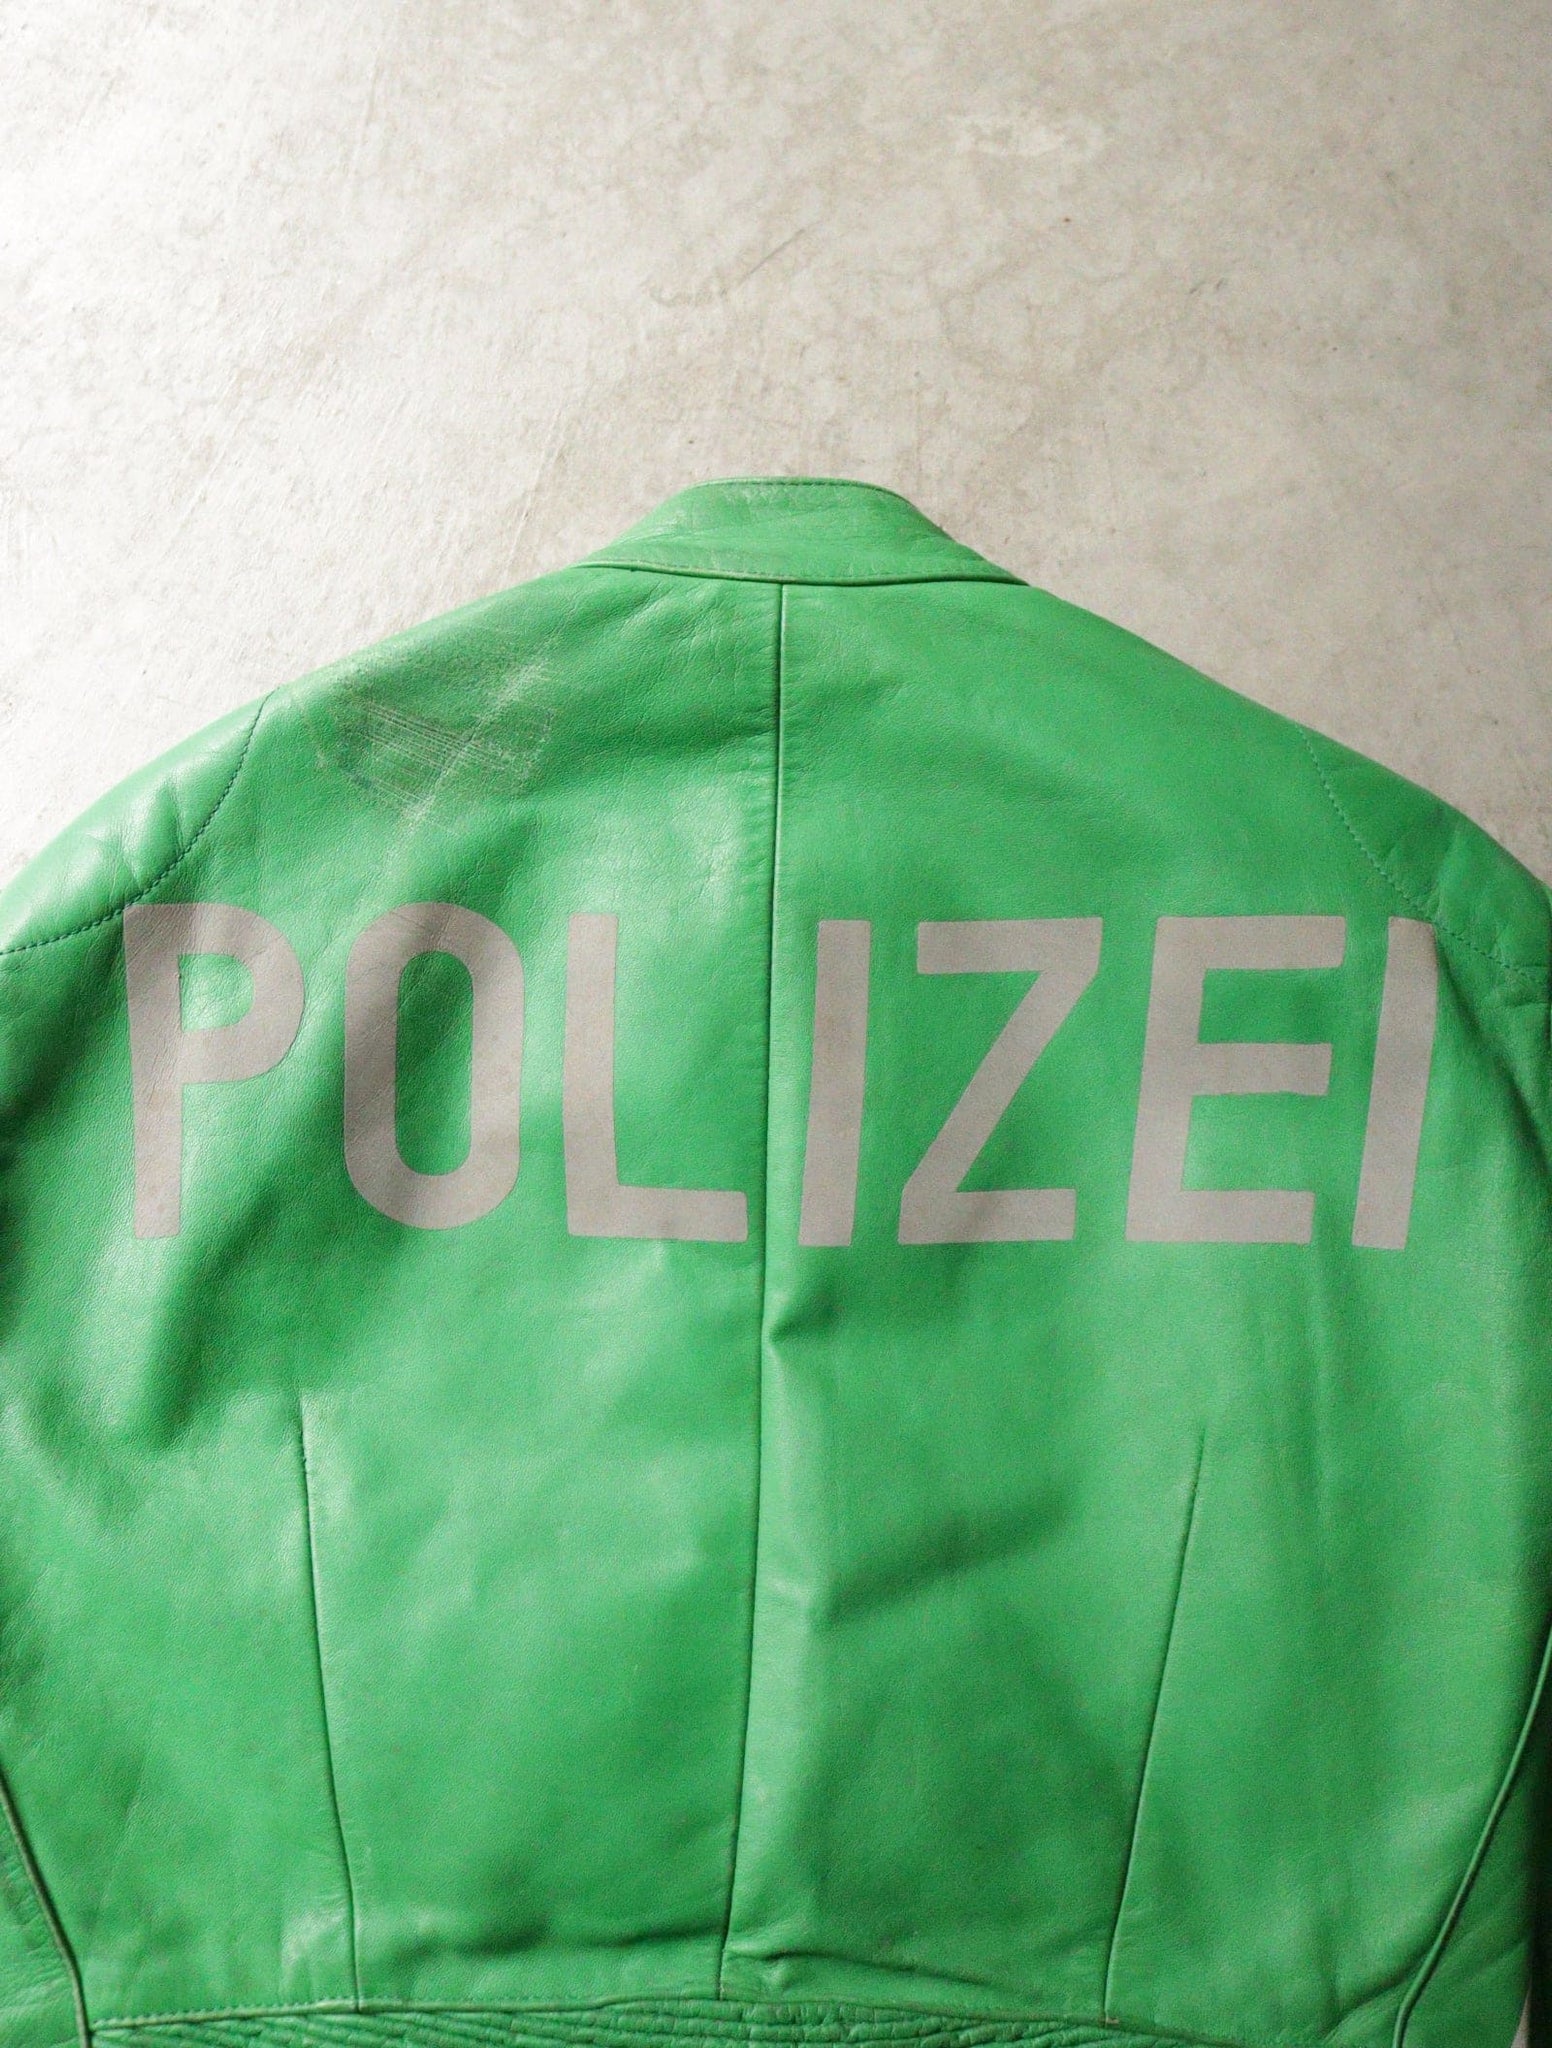 1980S GERMAN POLIZEI MOTORCYCLE LEATHER JACKET